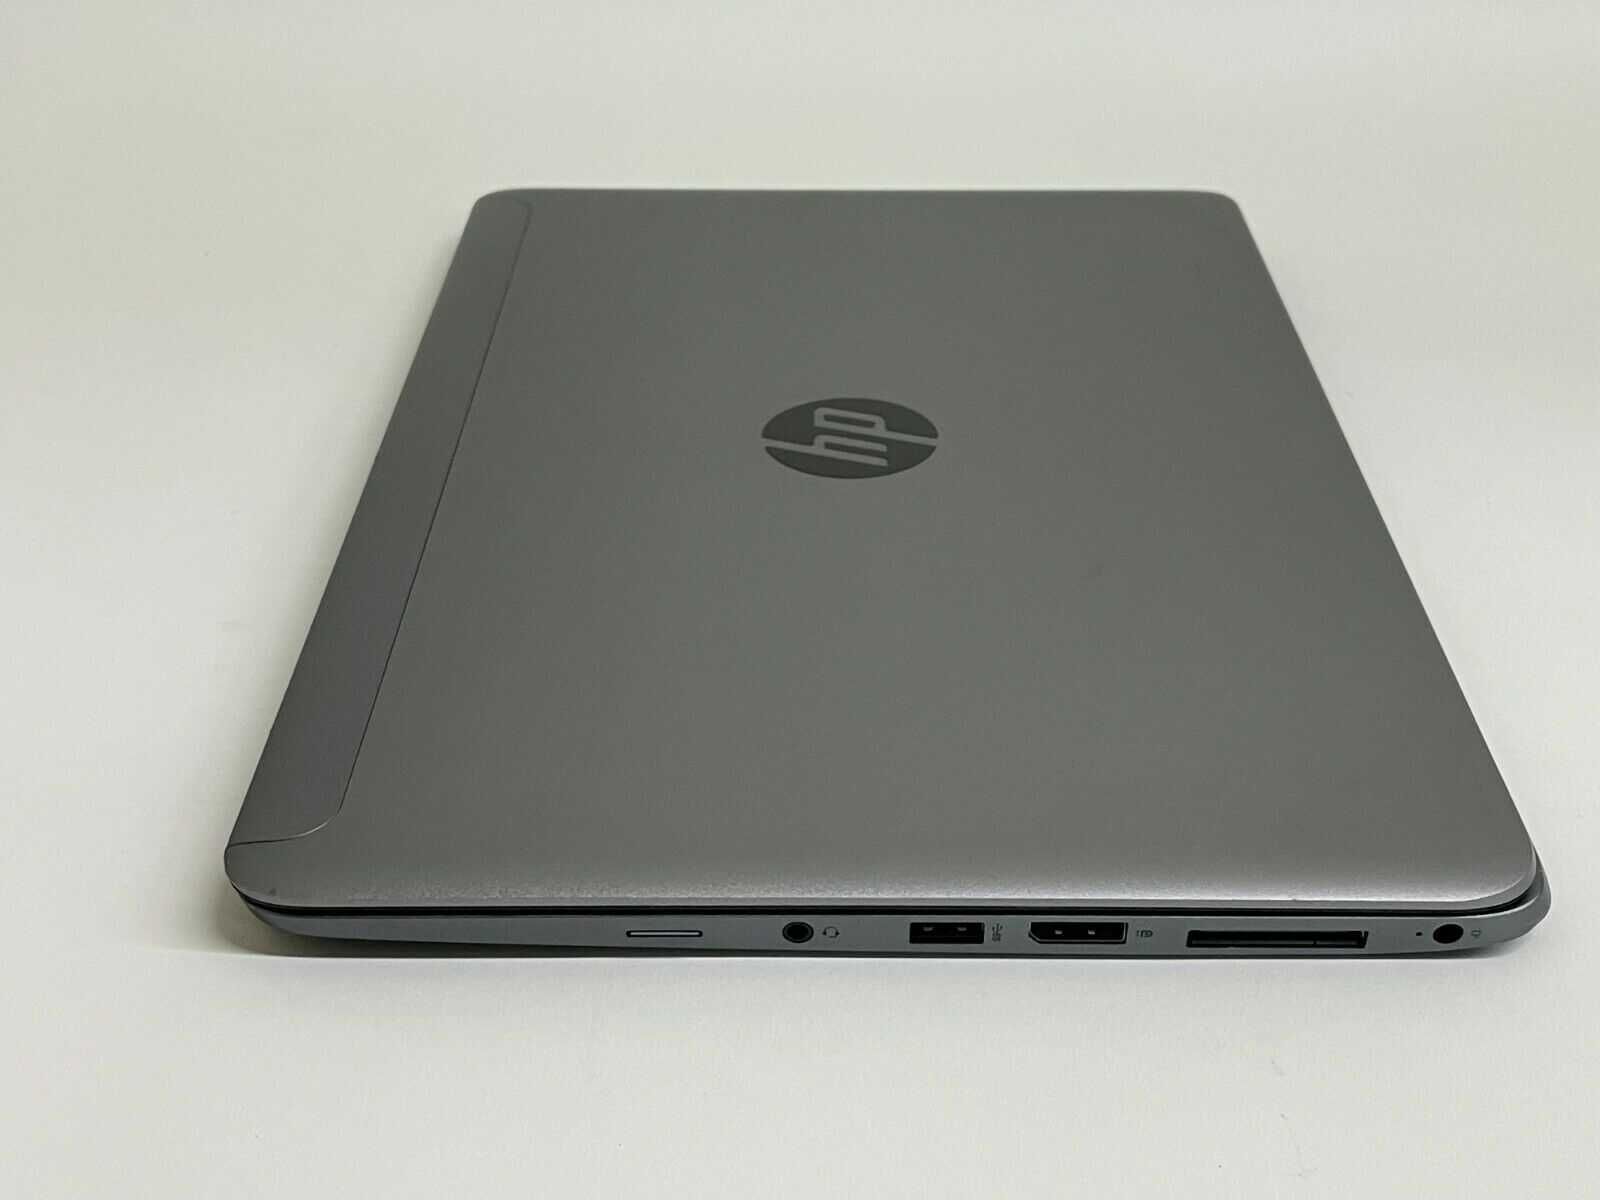 Лаптоп HP 1040 G2 I7-5600U 8GB 256GB SSD 14.0 FHD Windows 10